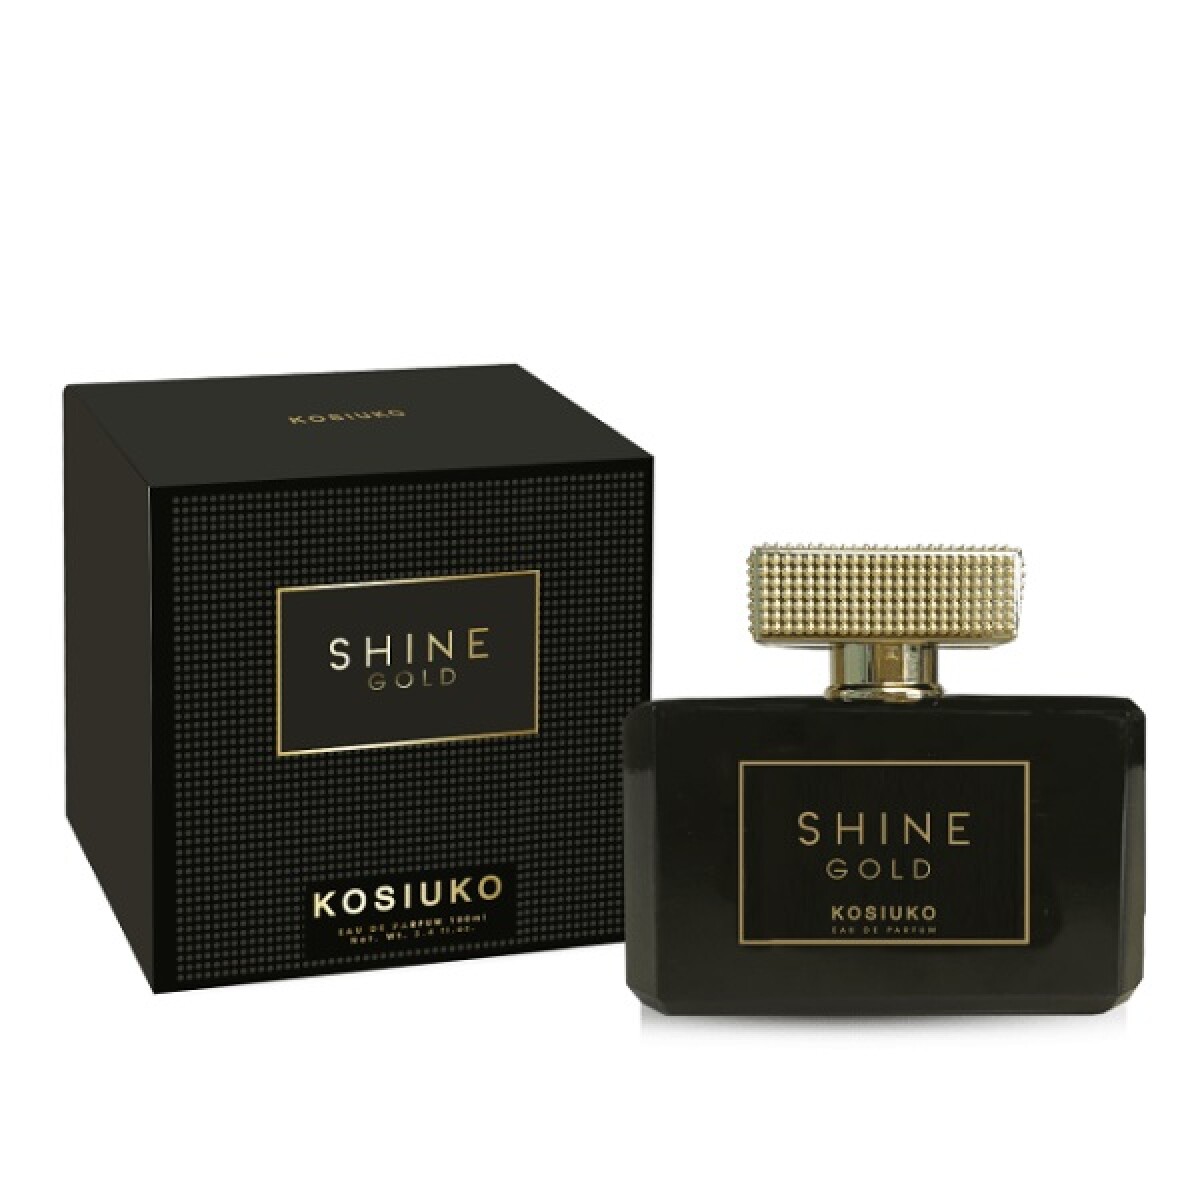 Perfume Kosiuko Edp Shine Gold 100 Ml. 